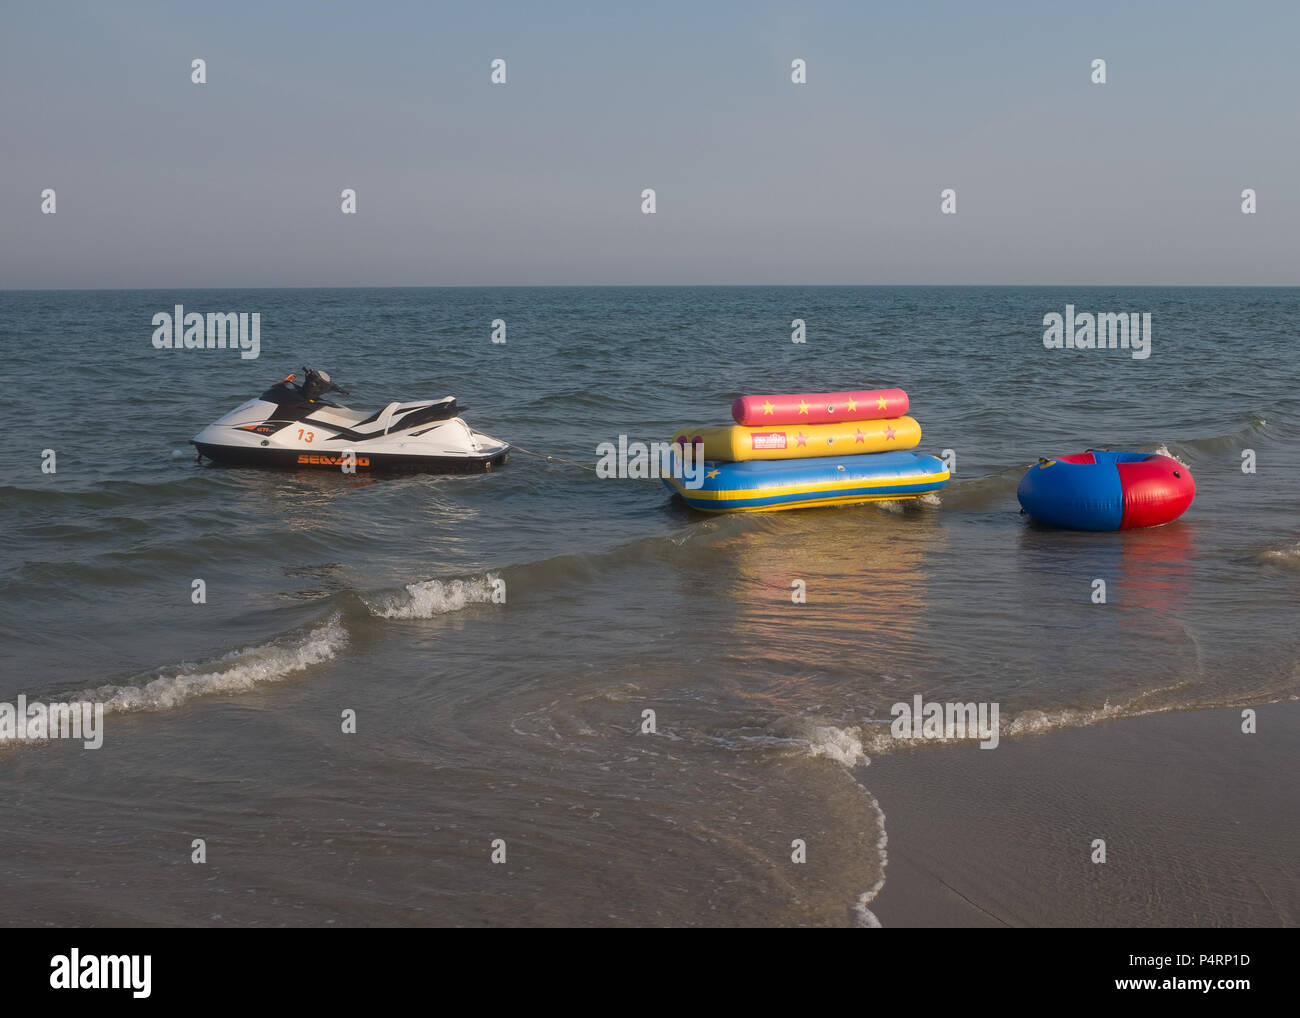 Hors-bord et inflatables flottant dans la mer, la Province de Prachuap Khiri Khan, Hua Hin, Thaïlande, Asie. Banque D'Images